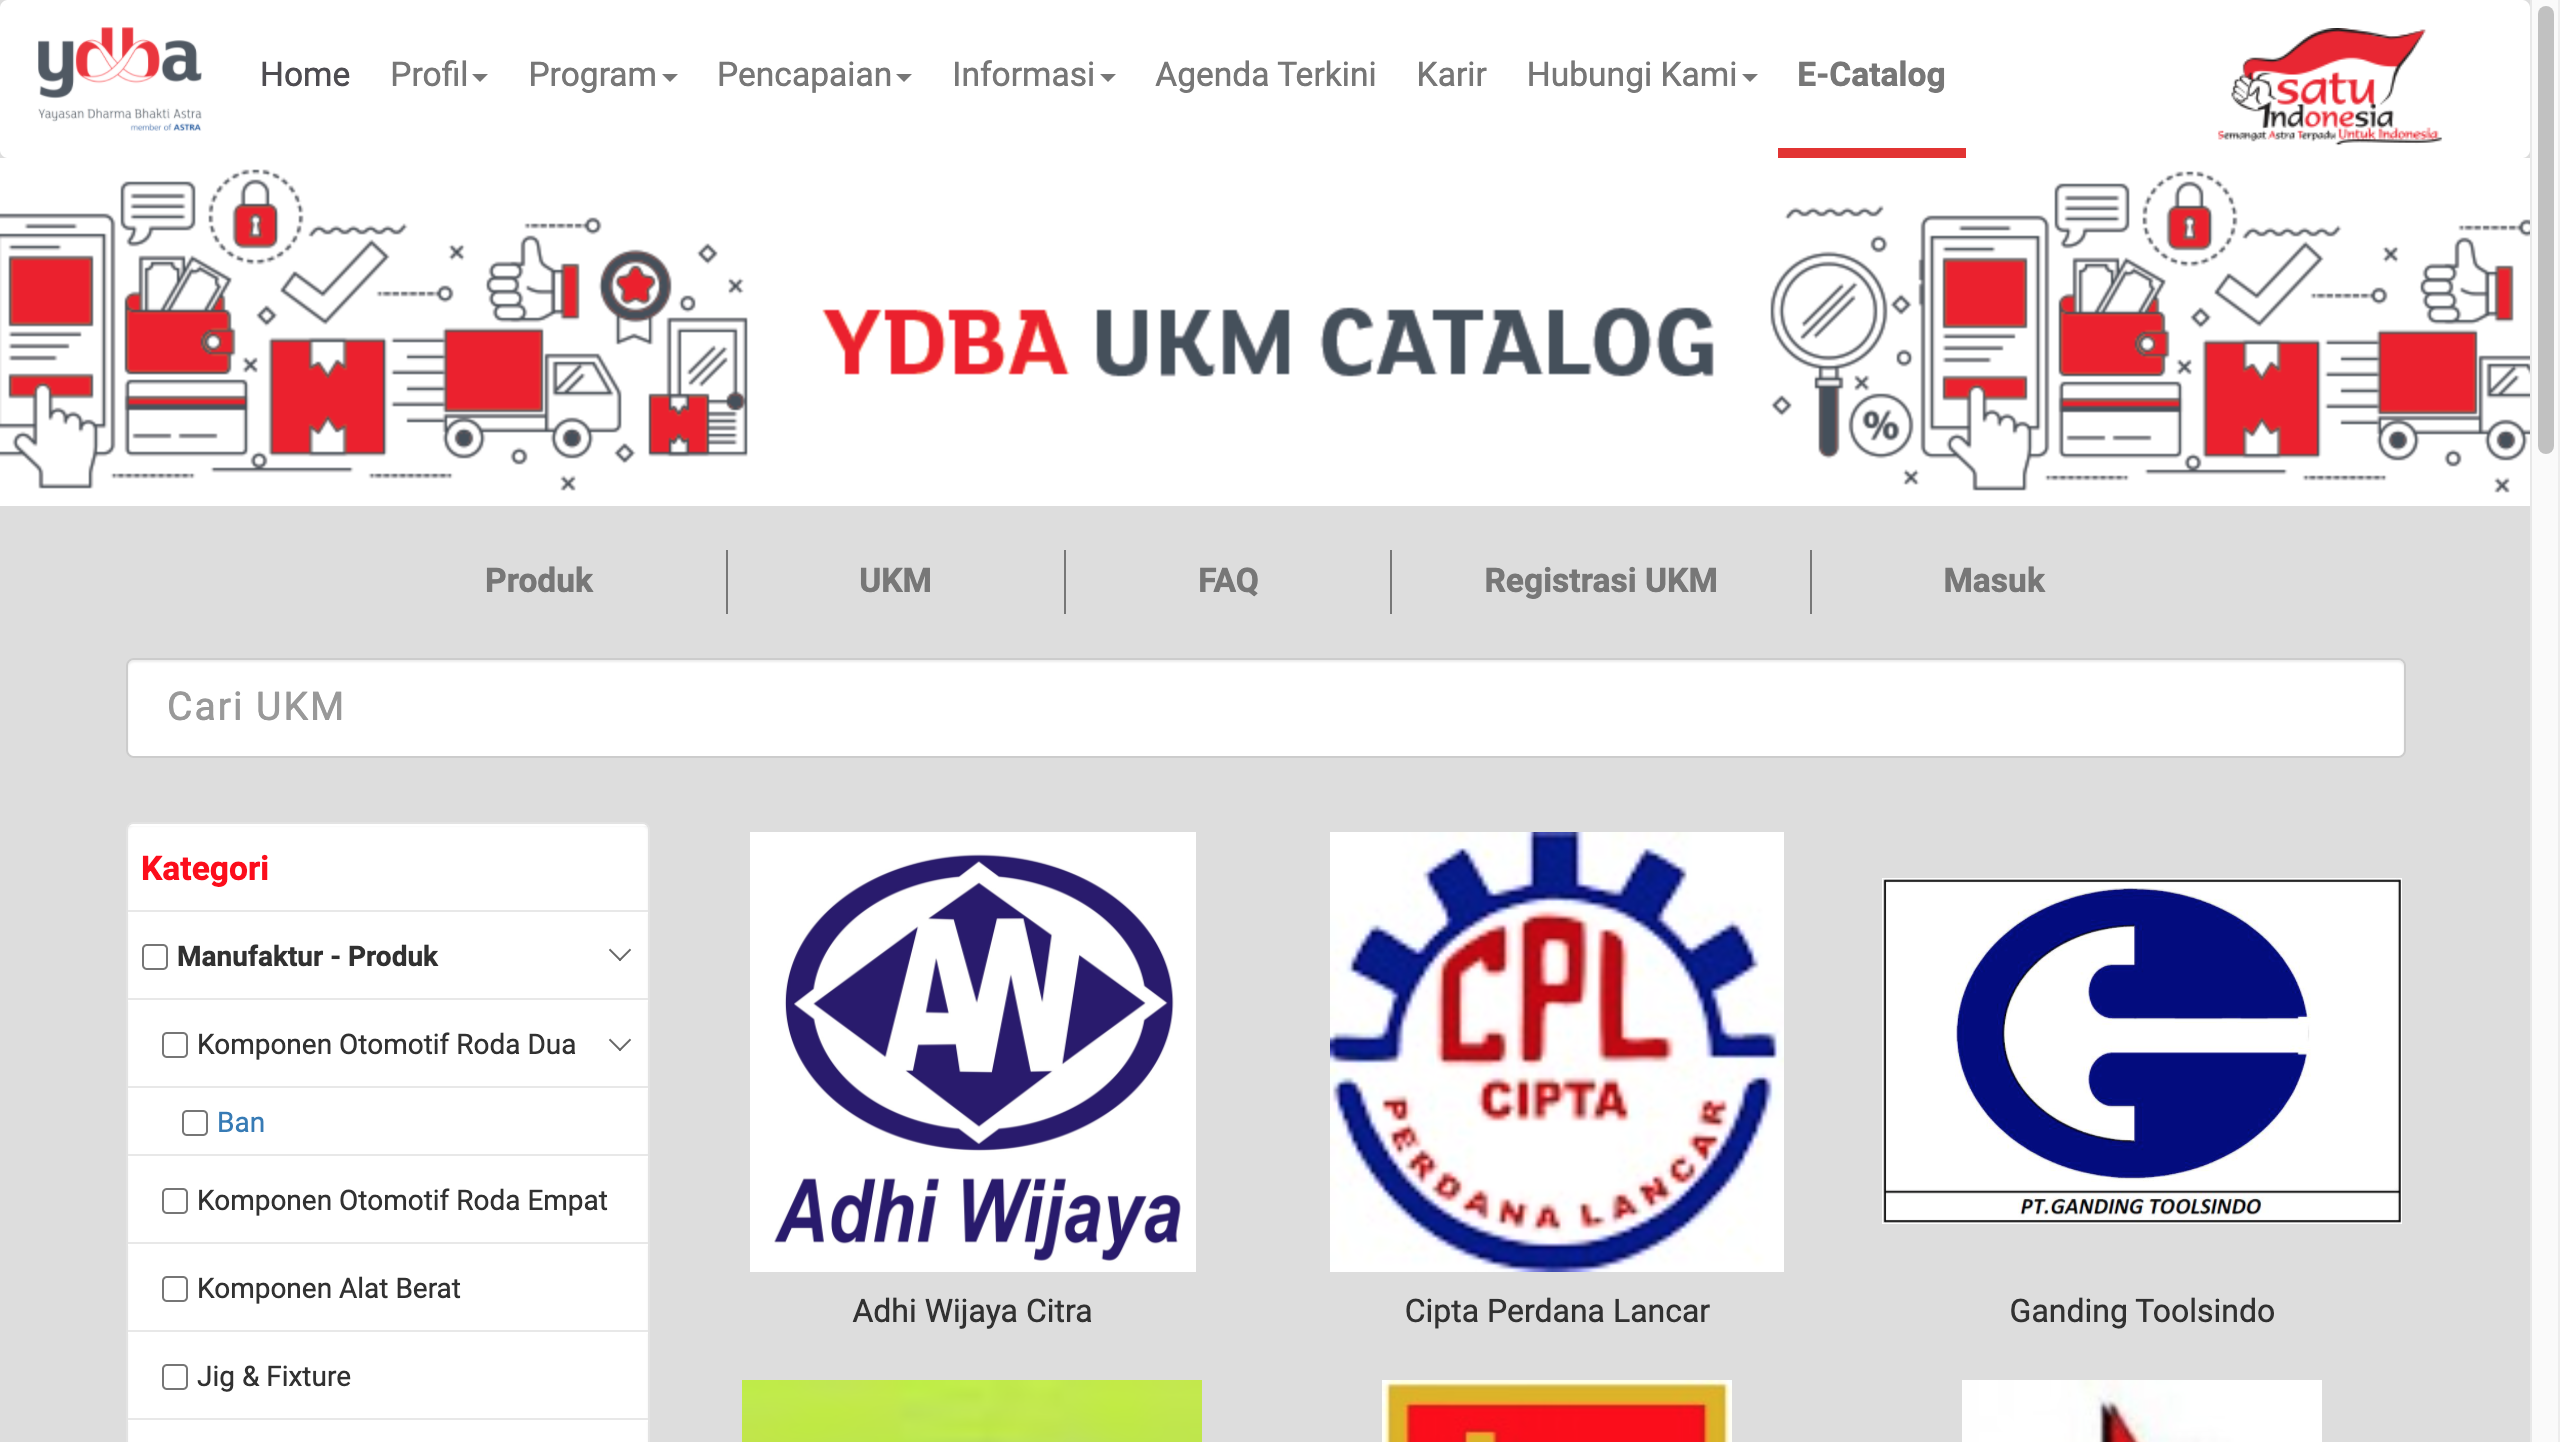 YDBA Catalog